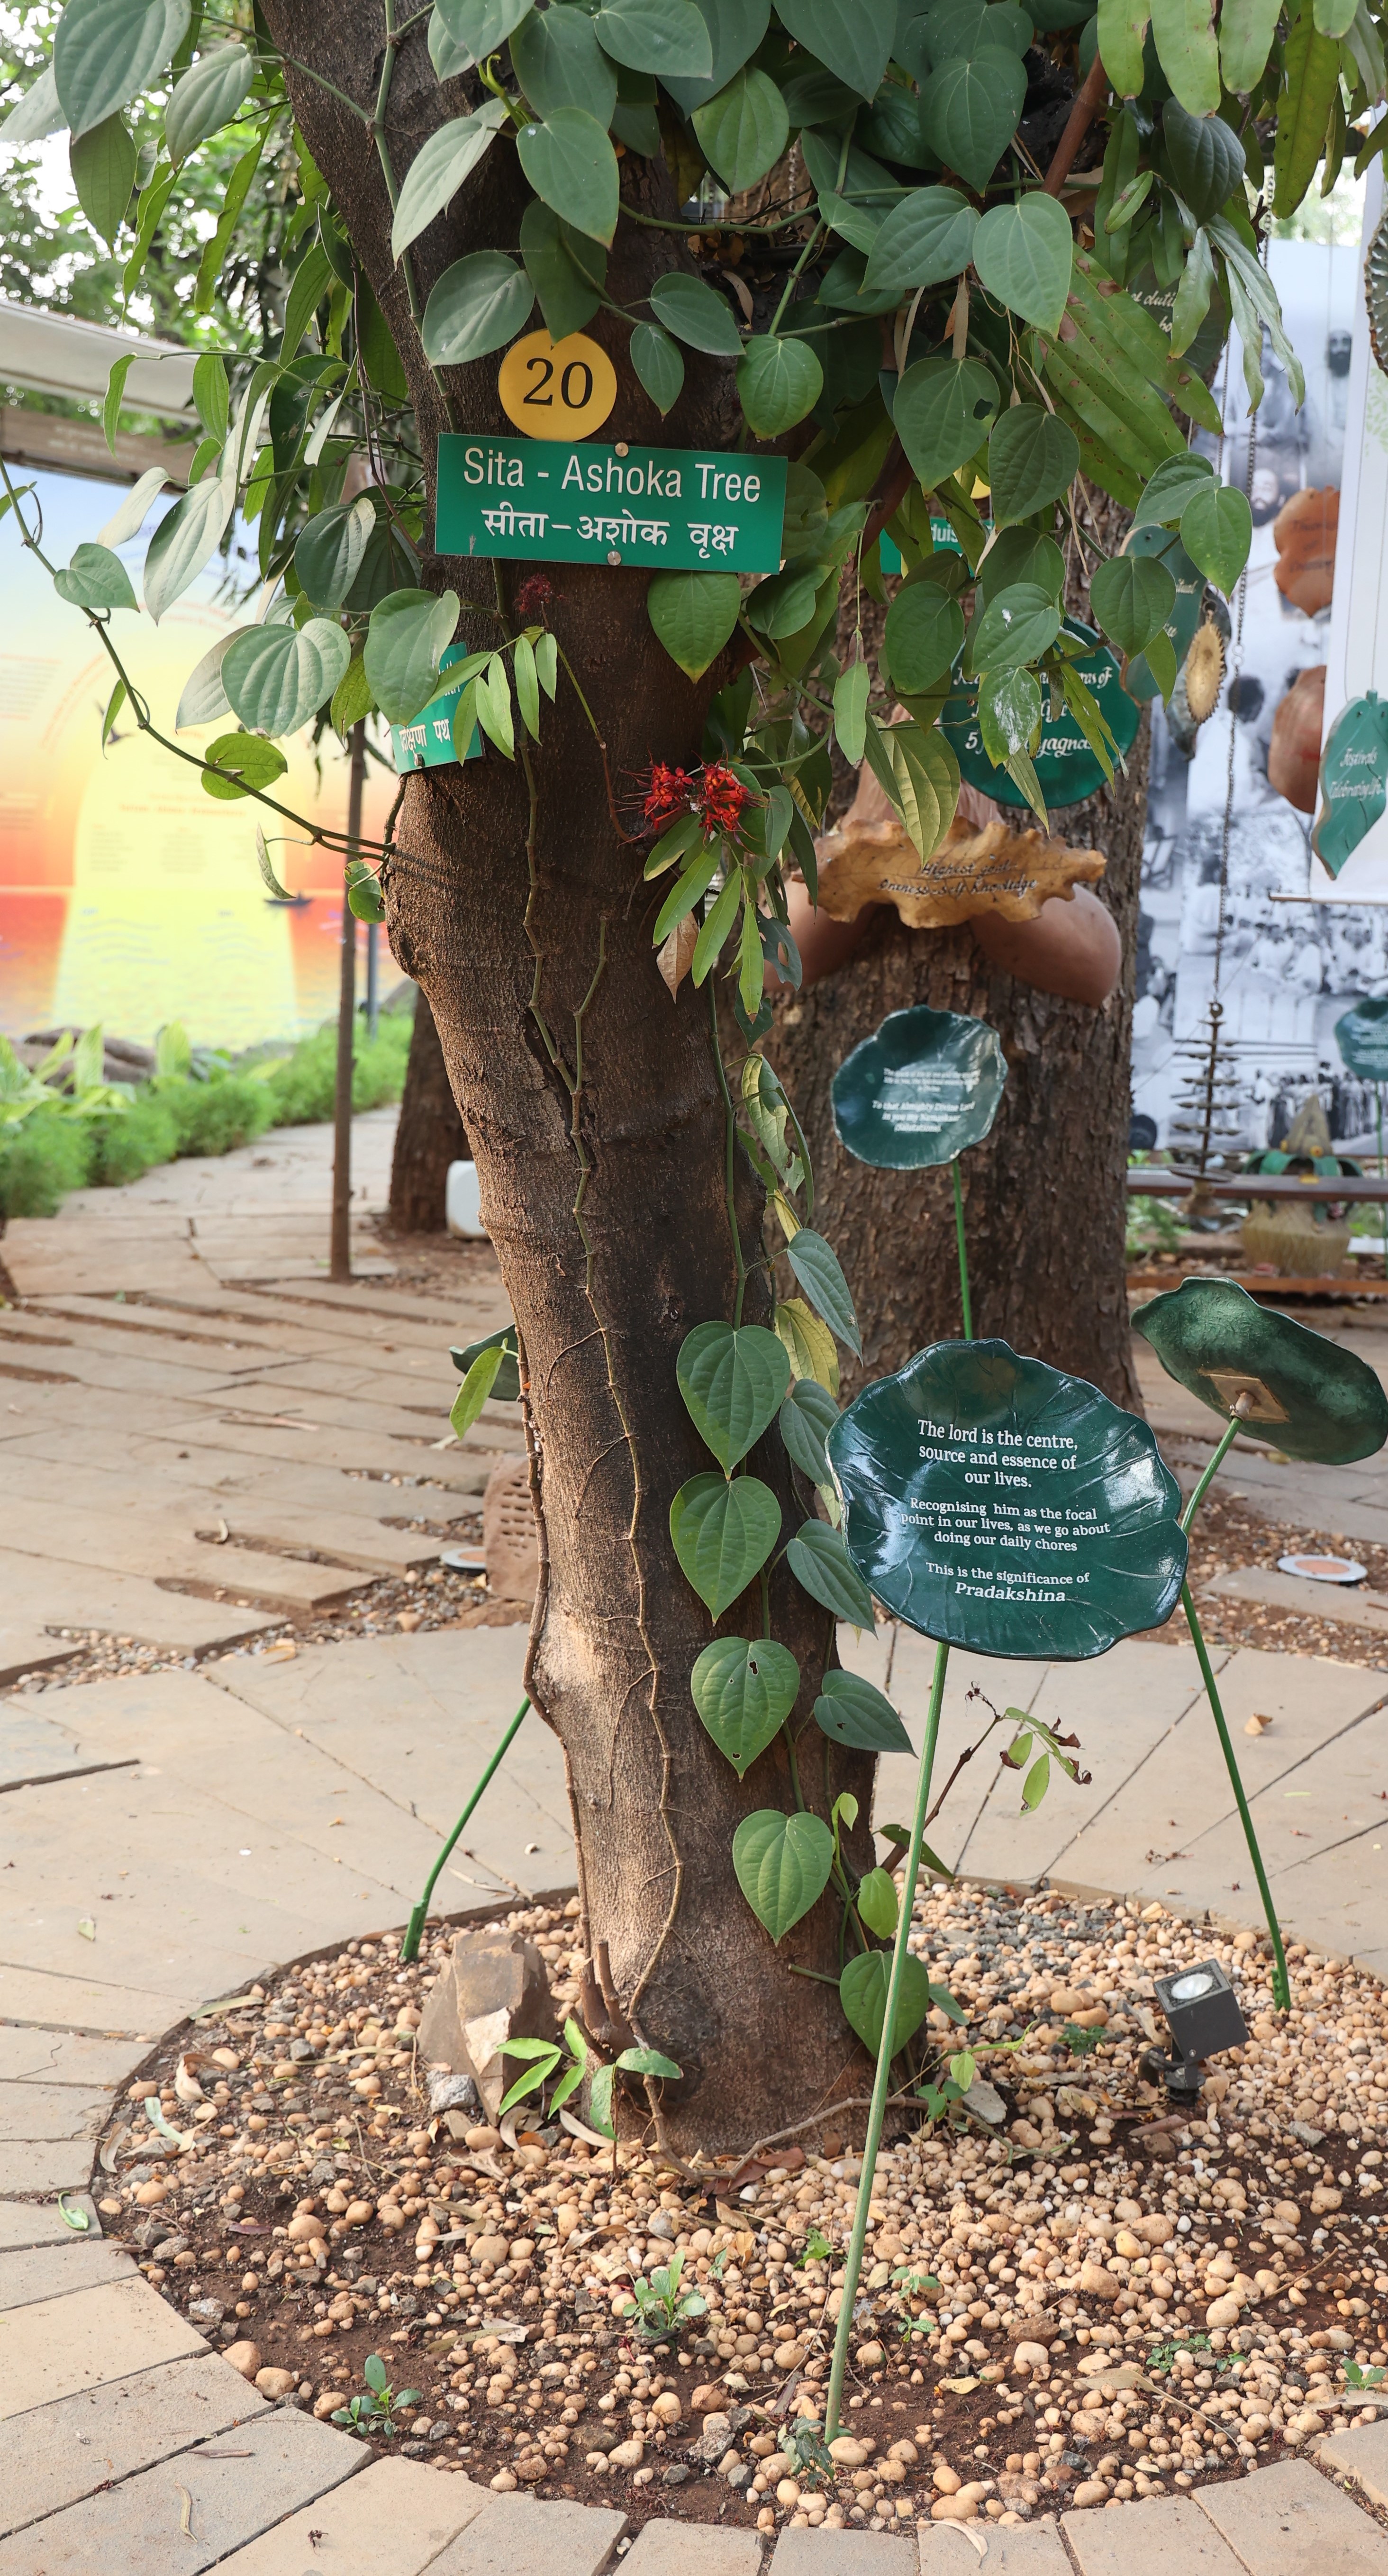 The Sita Ashoka Tree